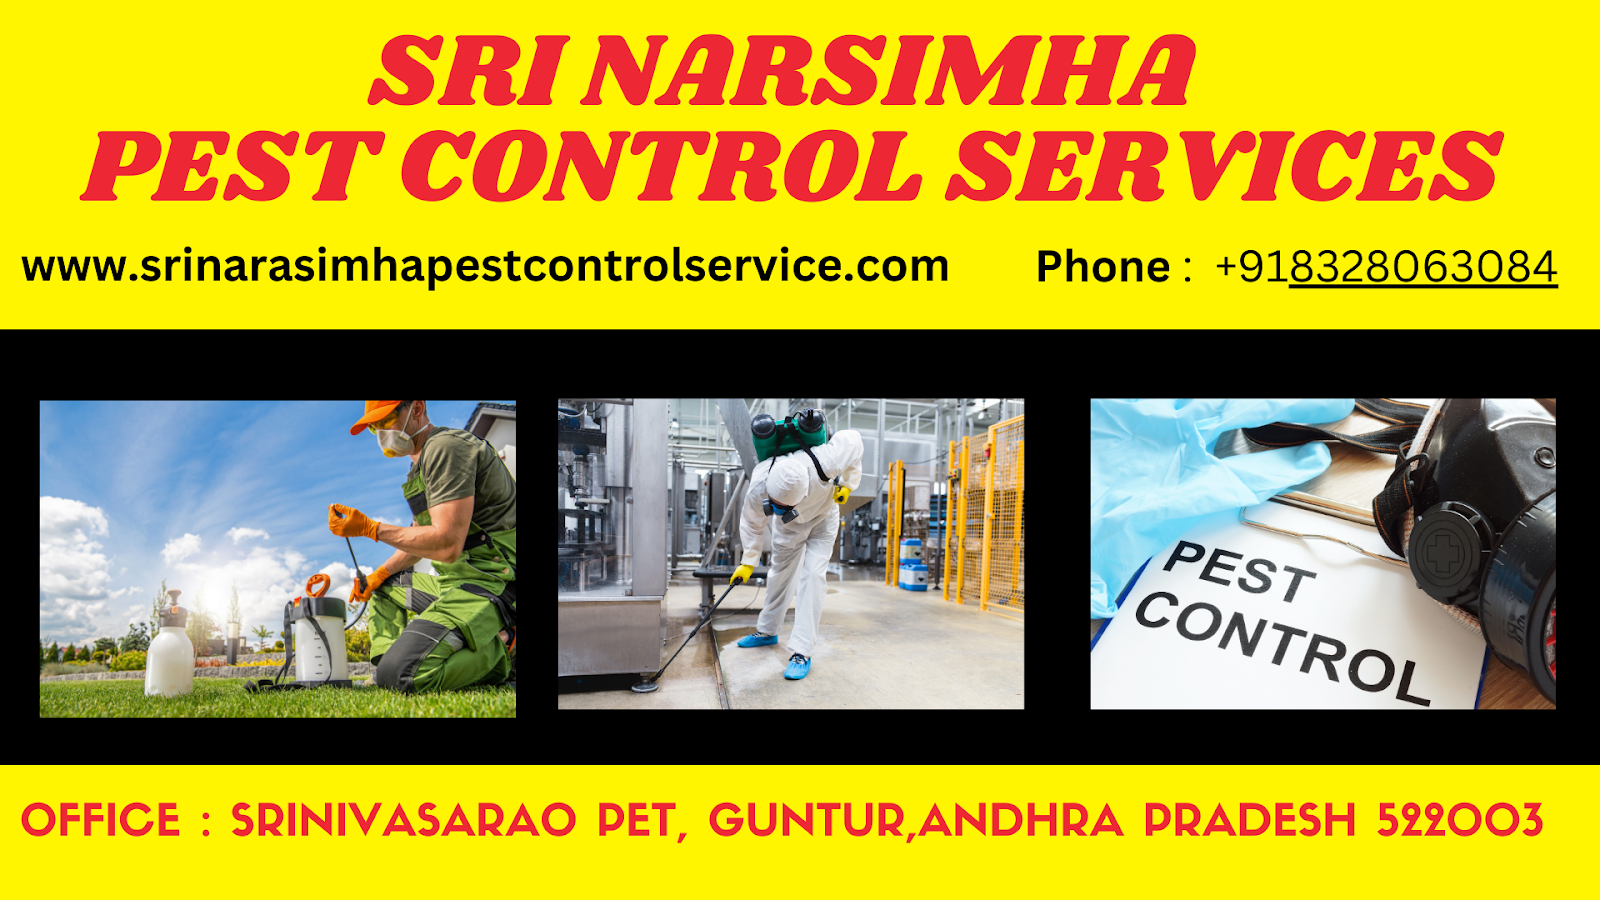 Sri Narasimha Pest Control